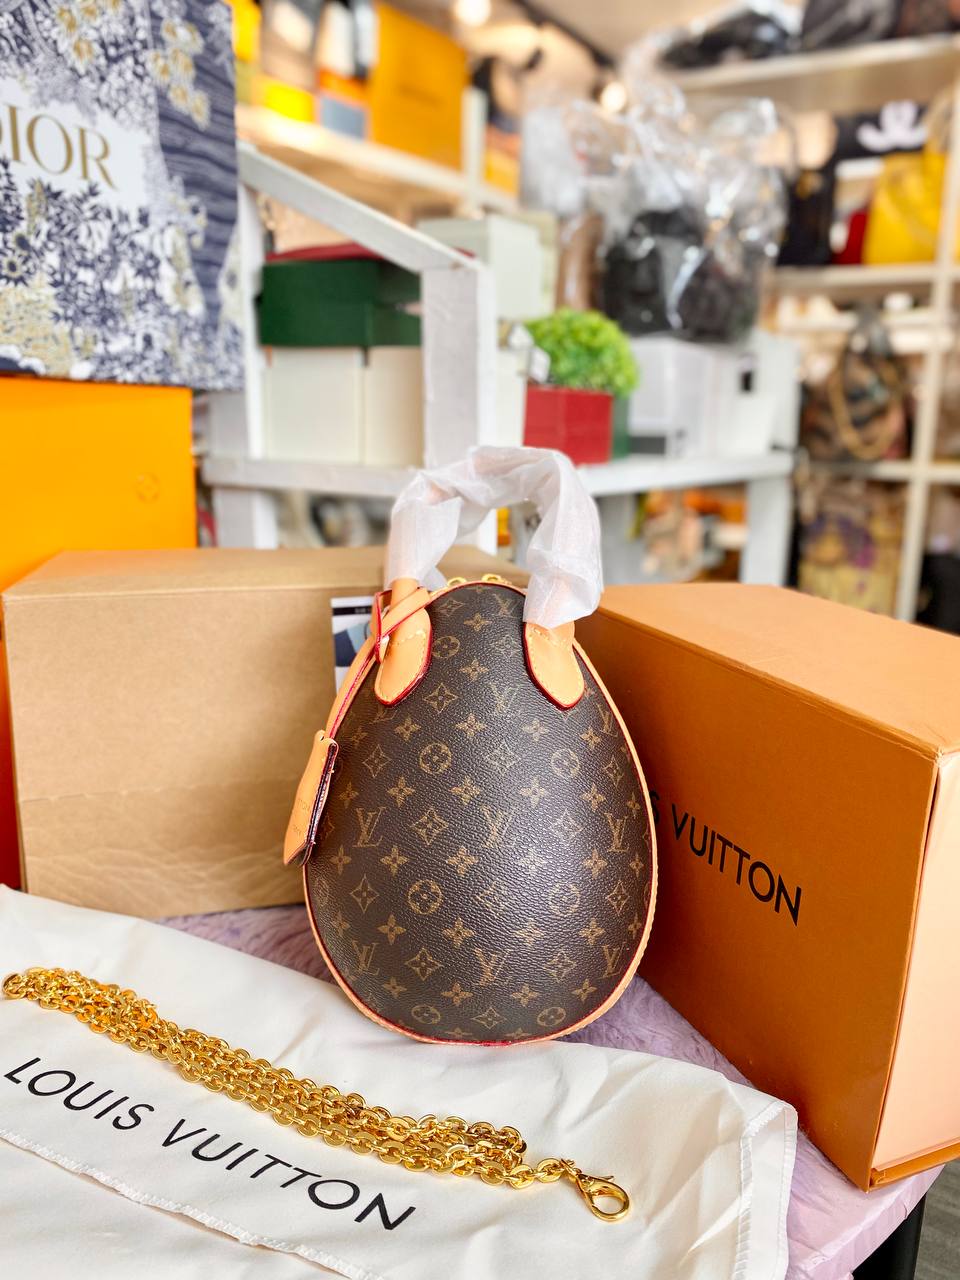 Louis Vuitton monogram eggbag